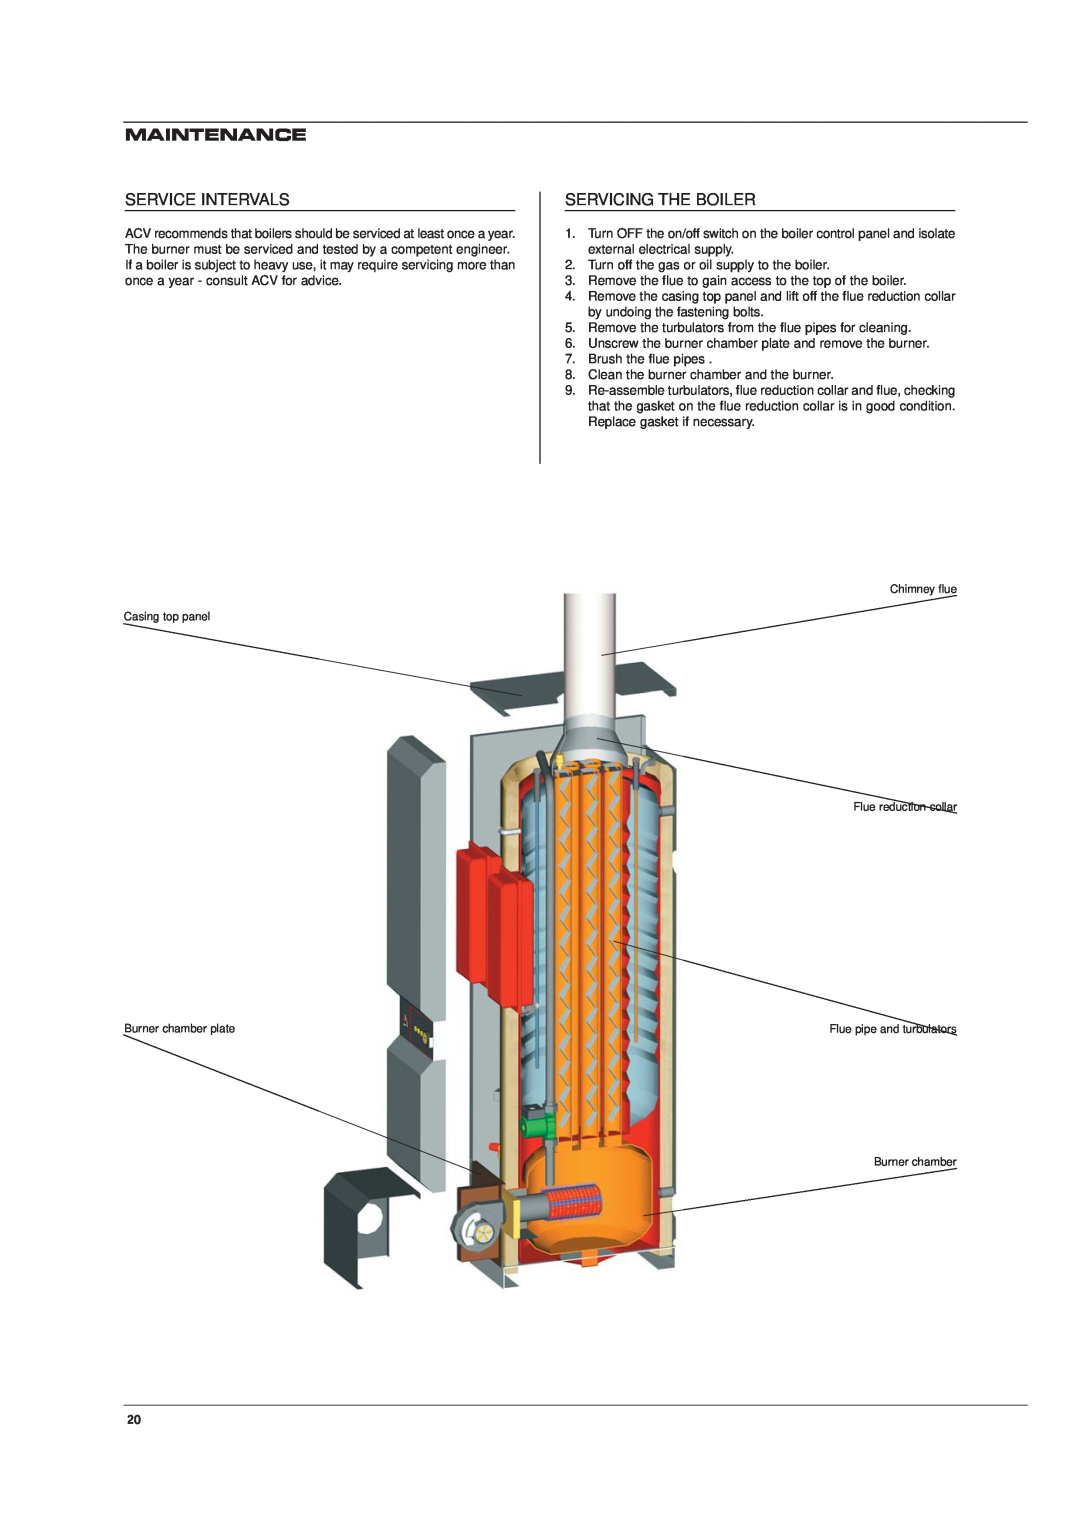 Heatmaster 150 JUMBO, HM 60 N, 100 N, 70 N manual Maintenance, Service Intervals, Servicing The Boiler 